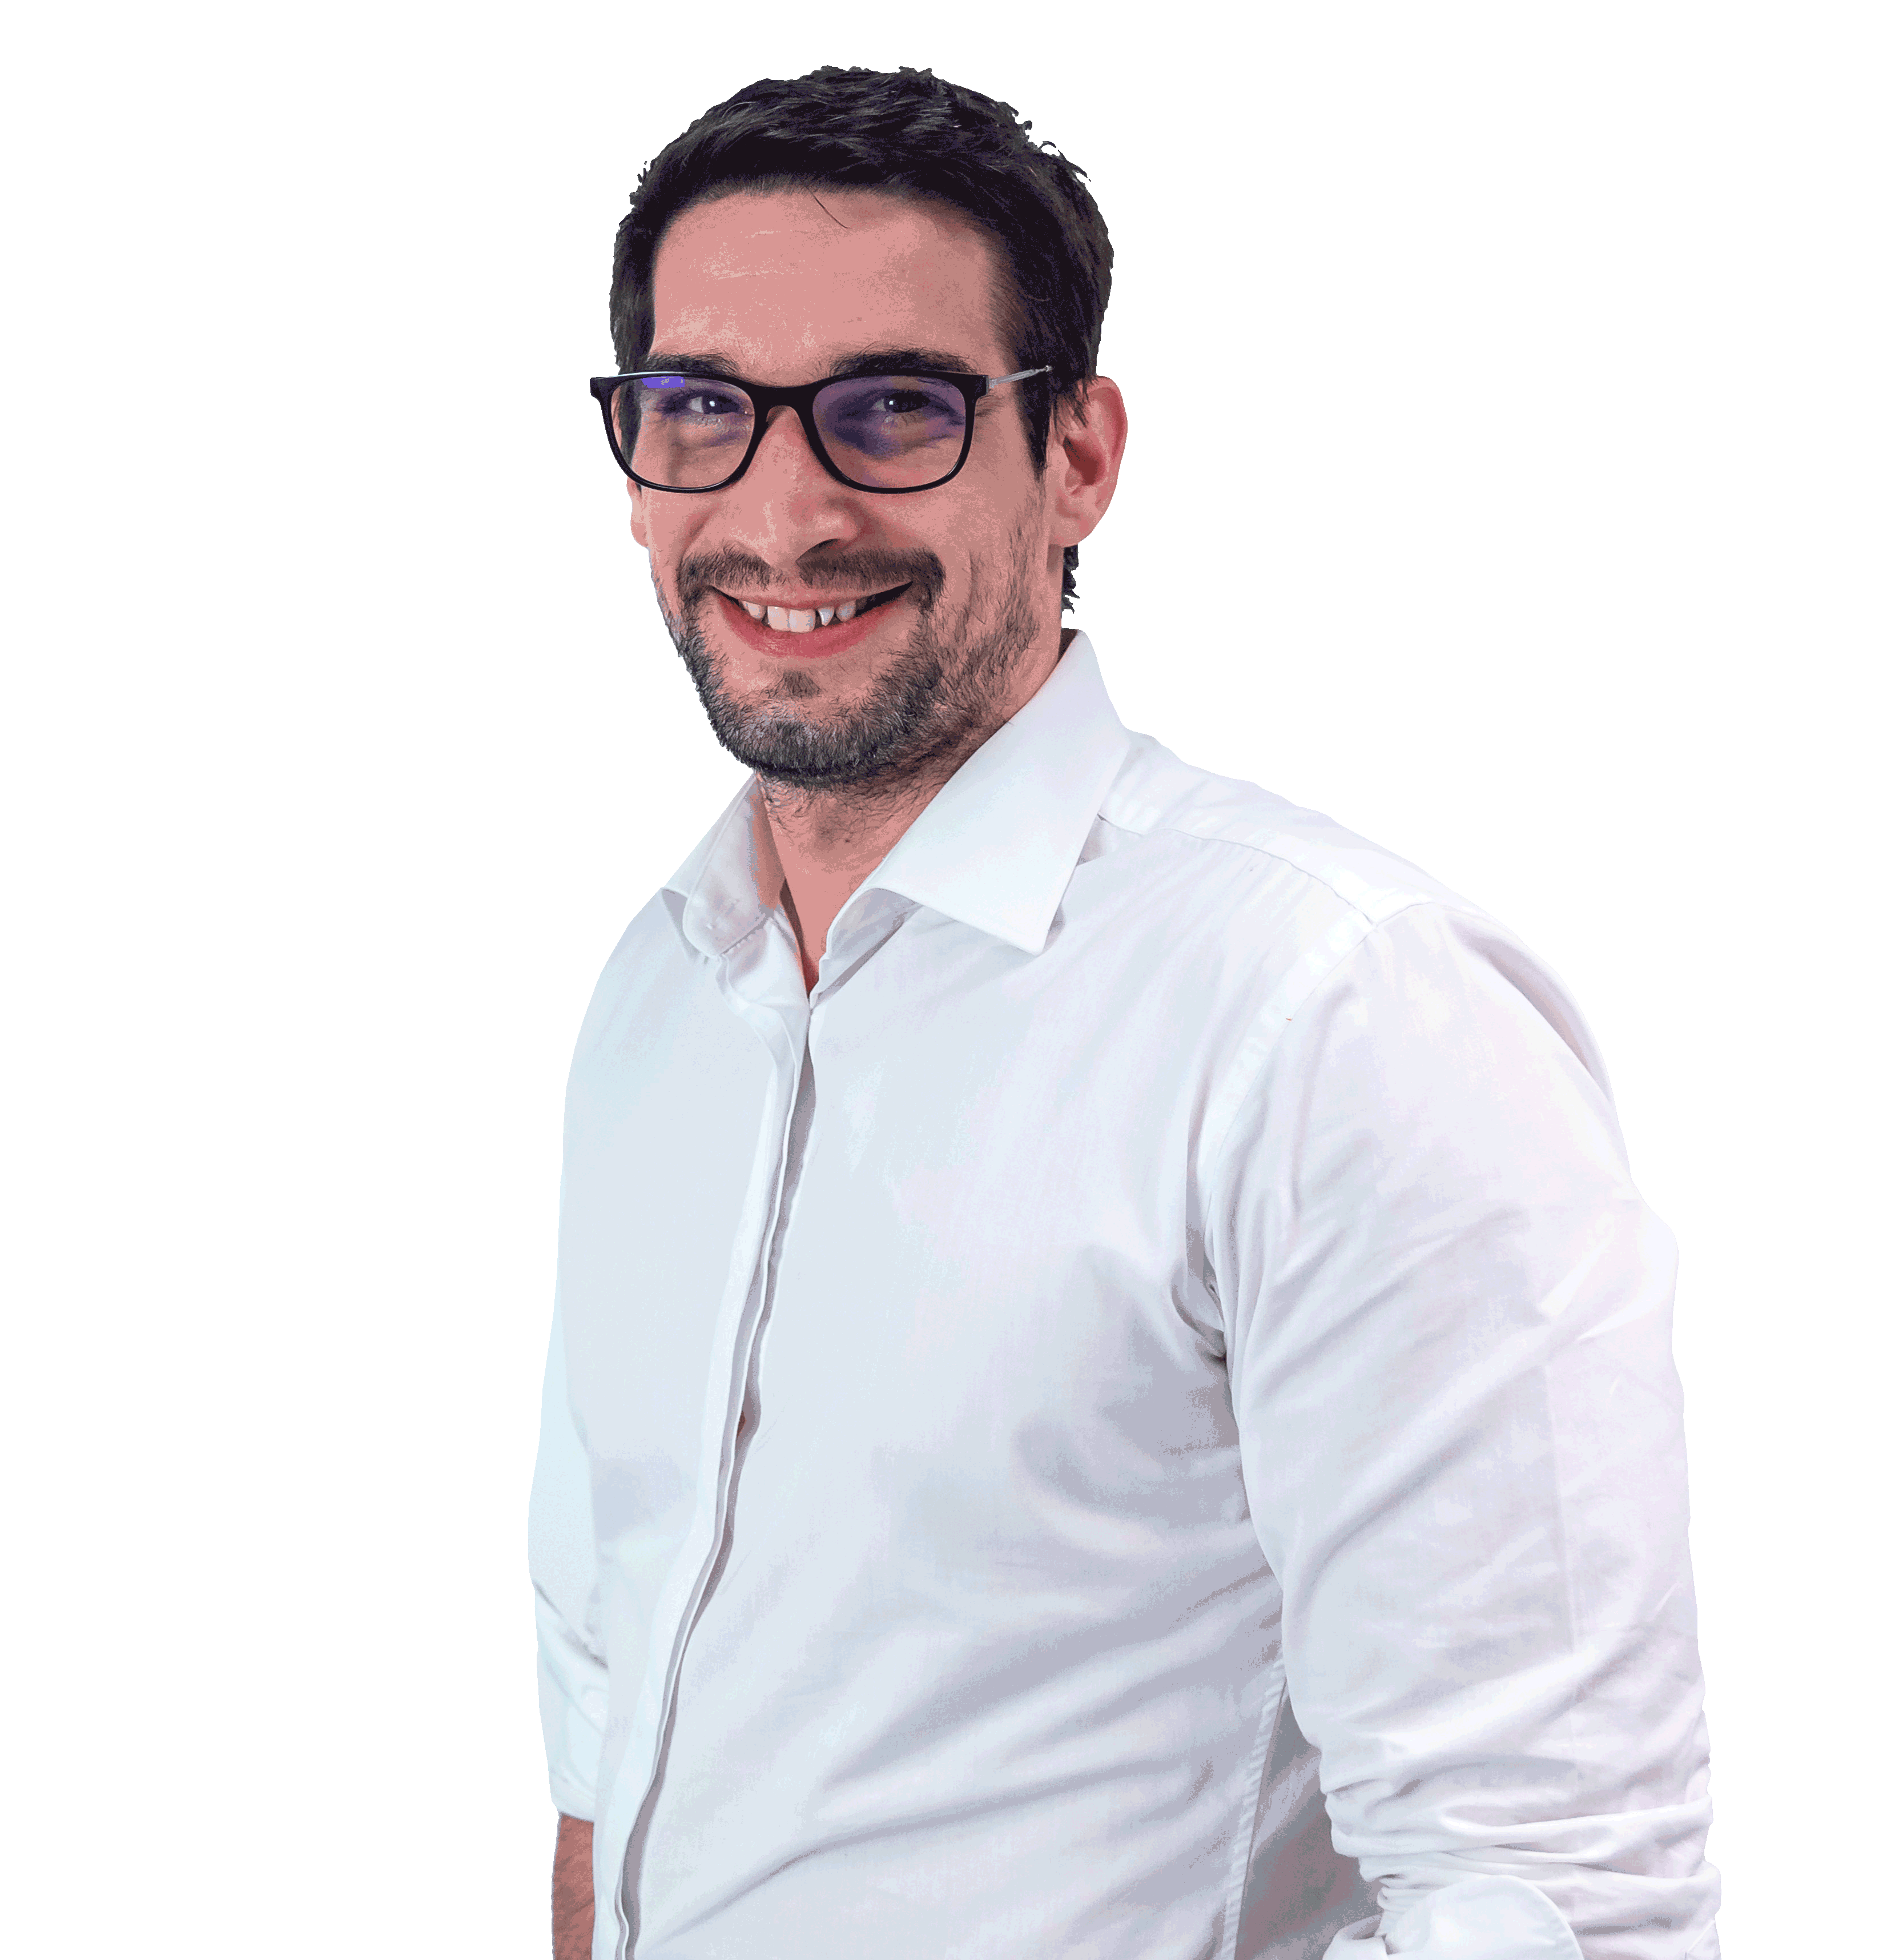 Headshot of a smiling man, Guillaume Grasstek, in a white shirt